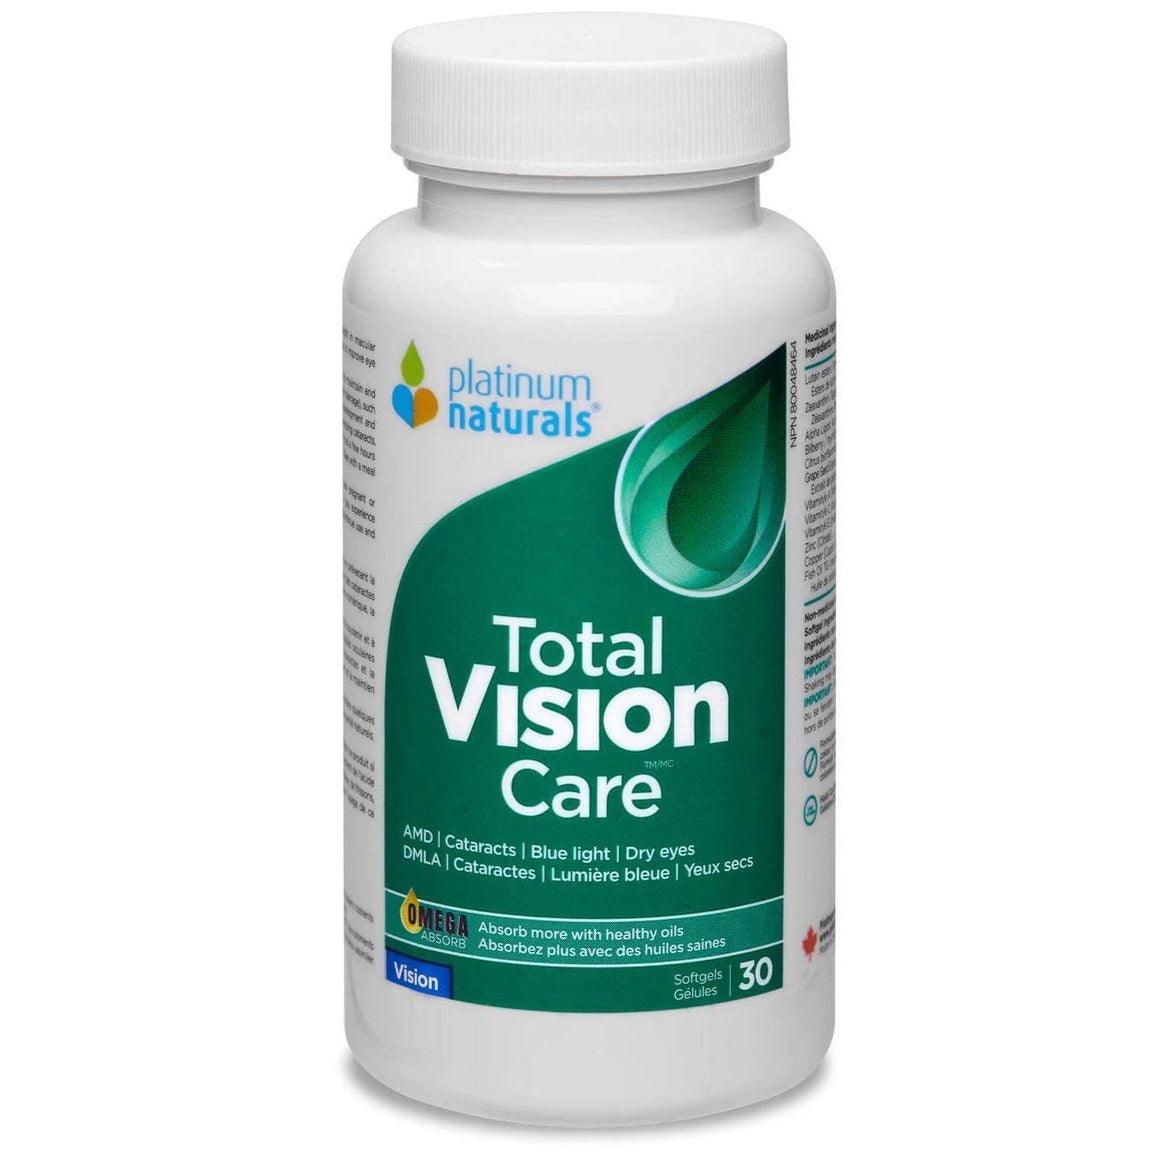 Platinum Naturals Total Vision Care 30 Softgels Supplements - Eye Health at Village Vitamin Store